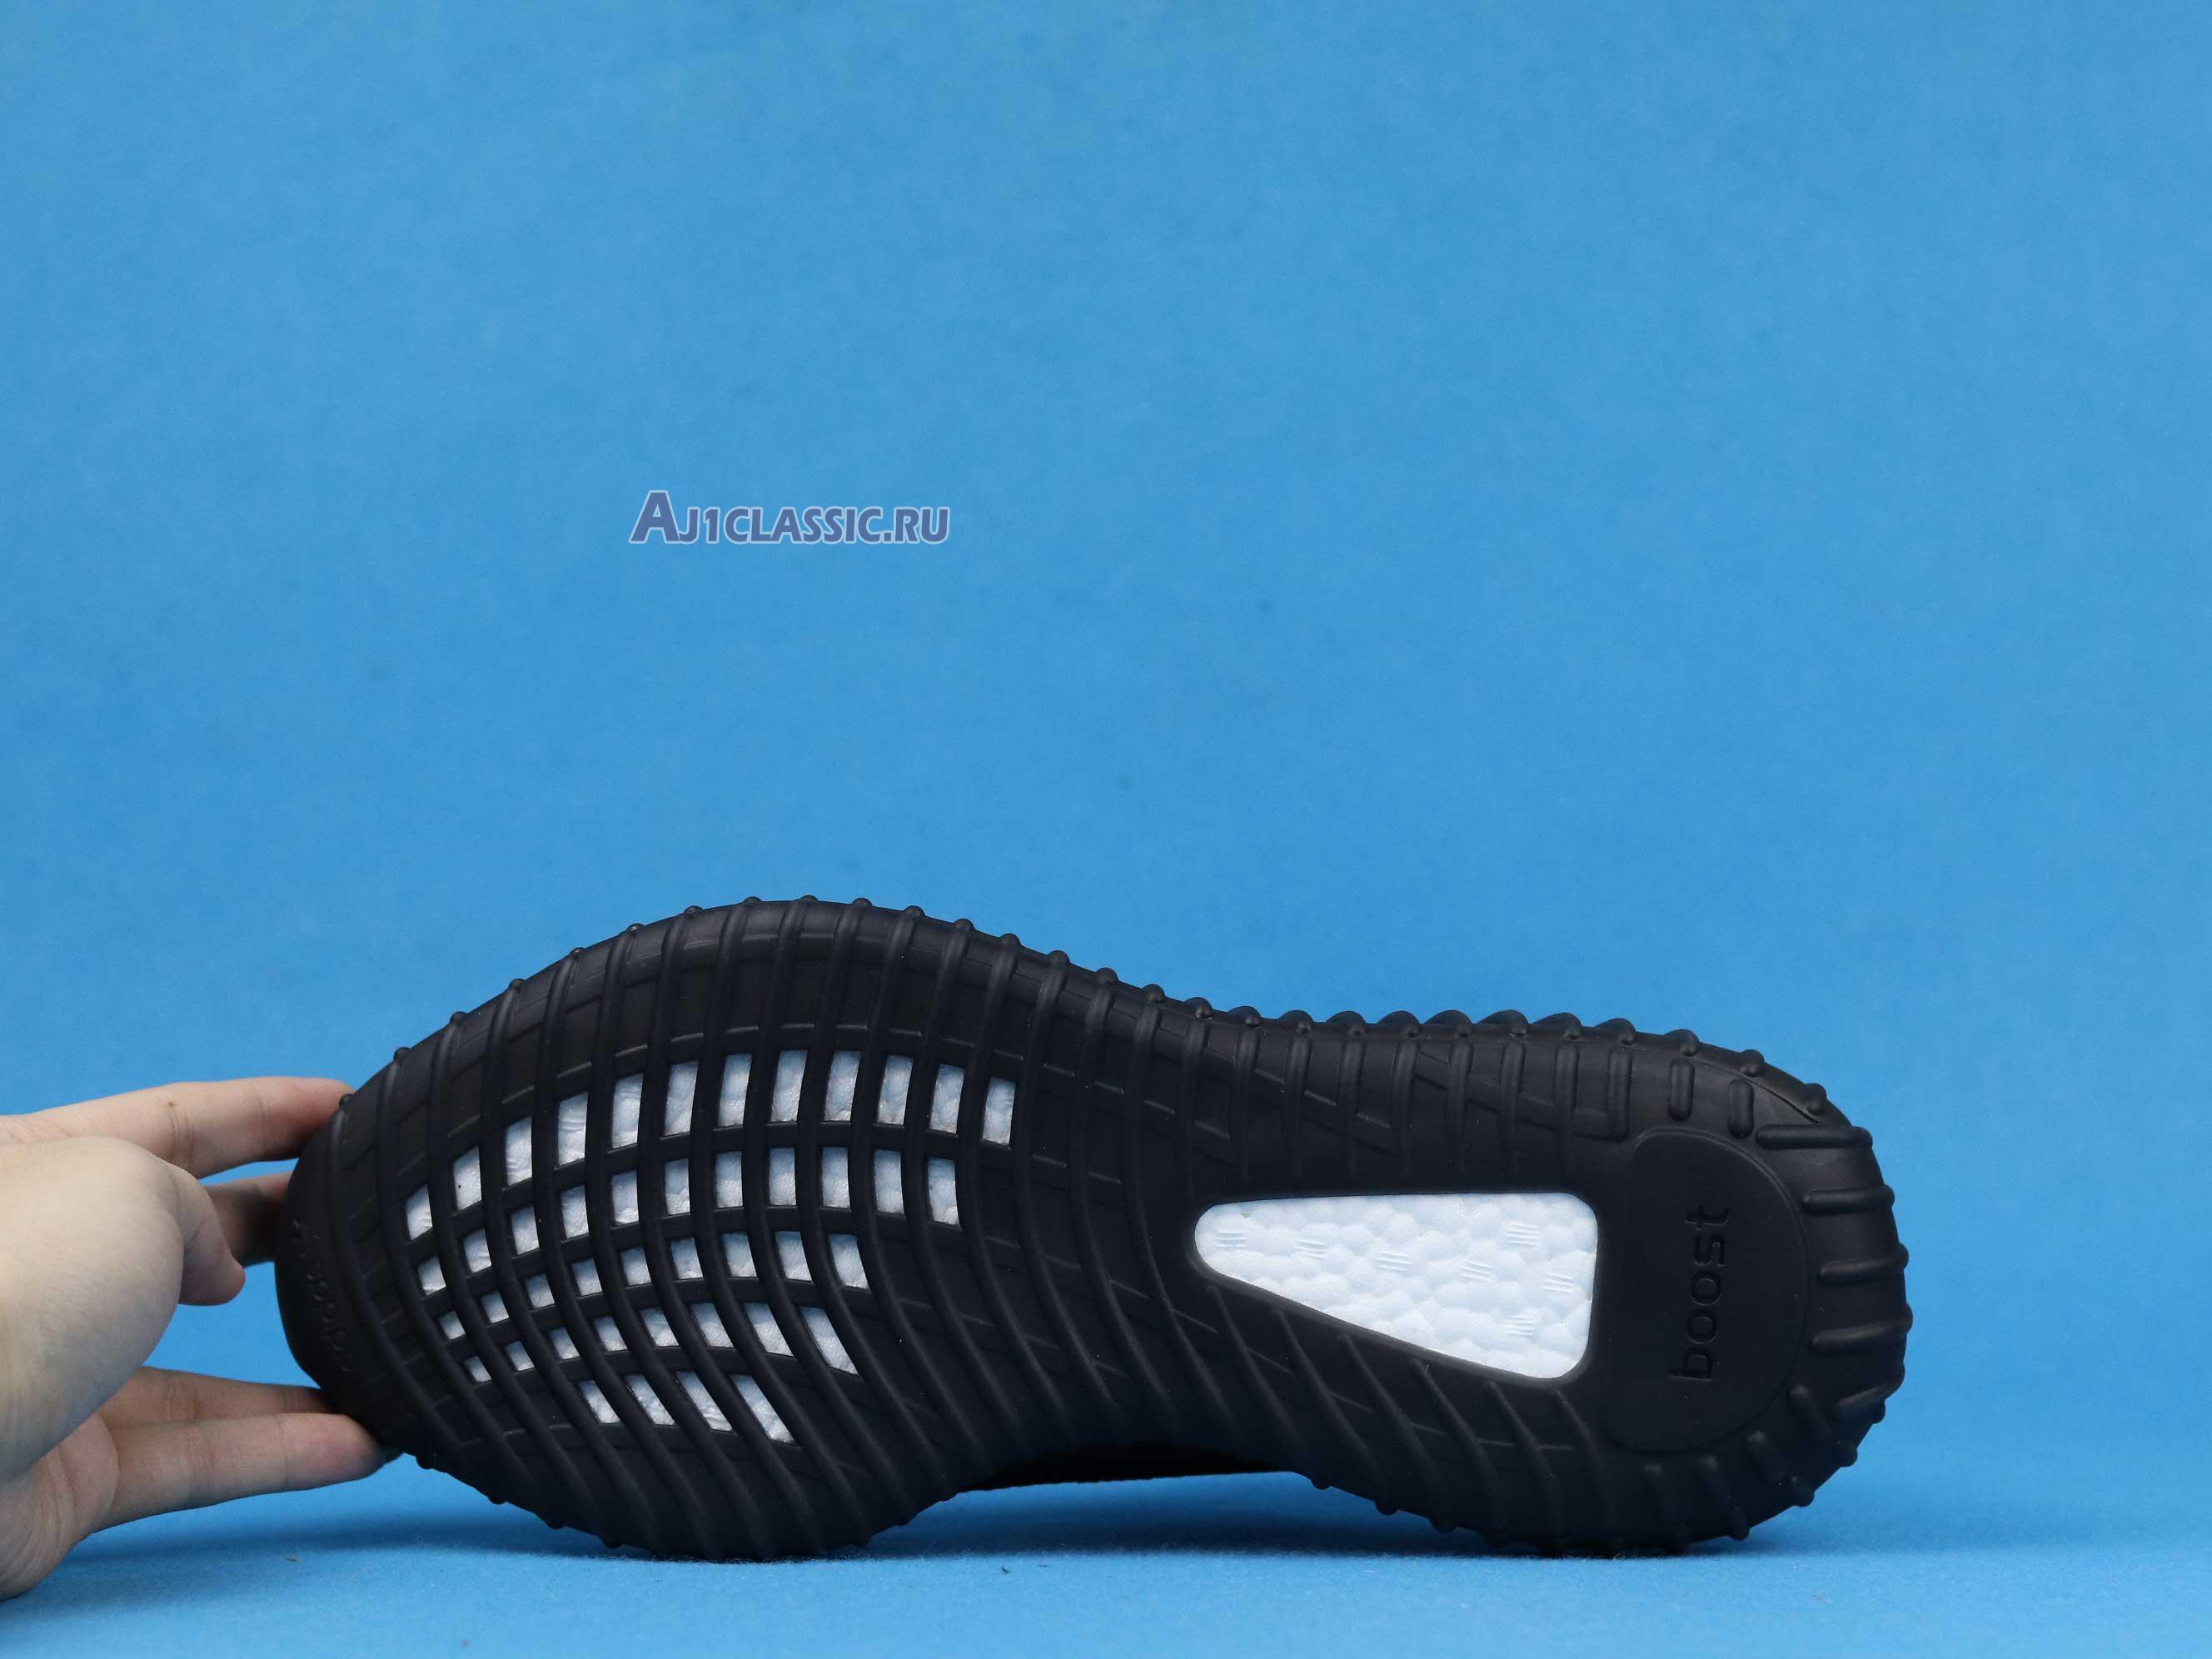 Adidas Yeezy Boost 350 V2 "Oreo" BY1604